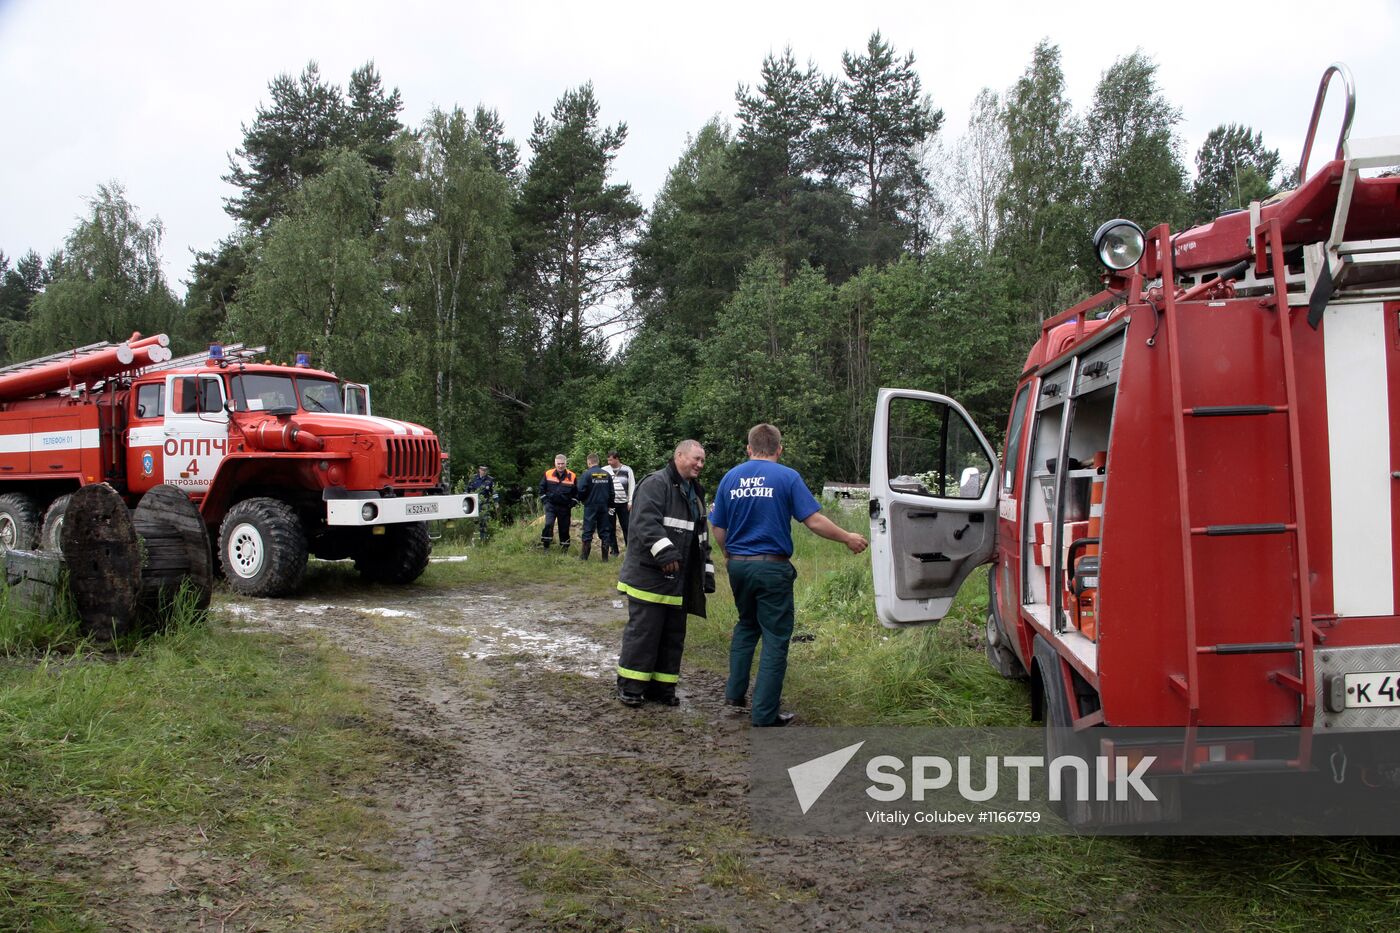 Sukhoi 27 jet crashes near Besovets aerodrome